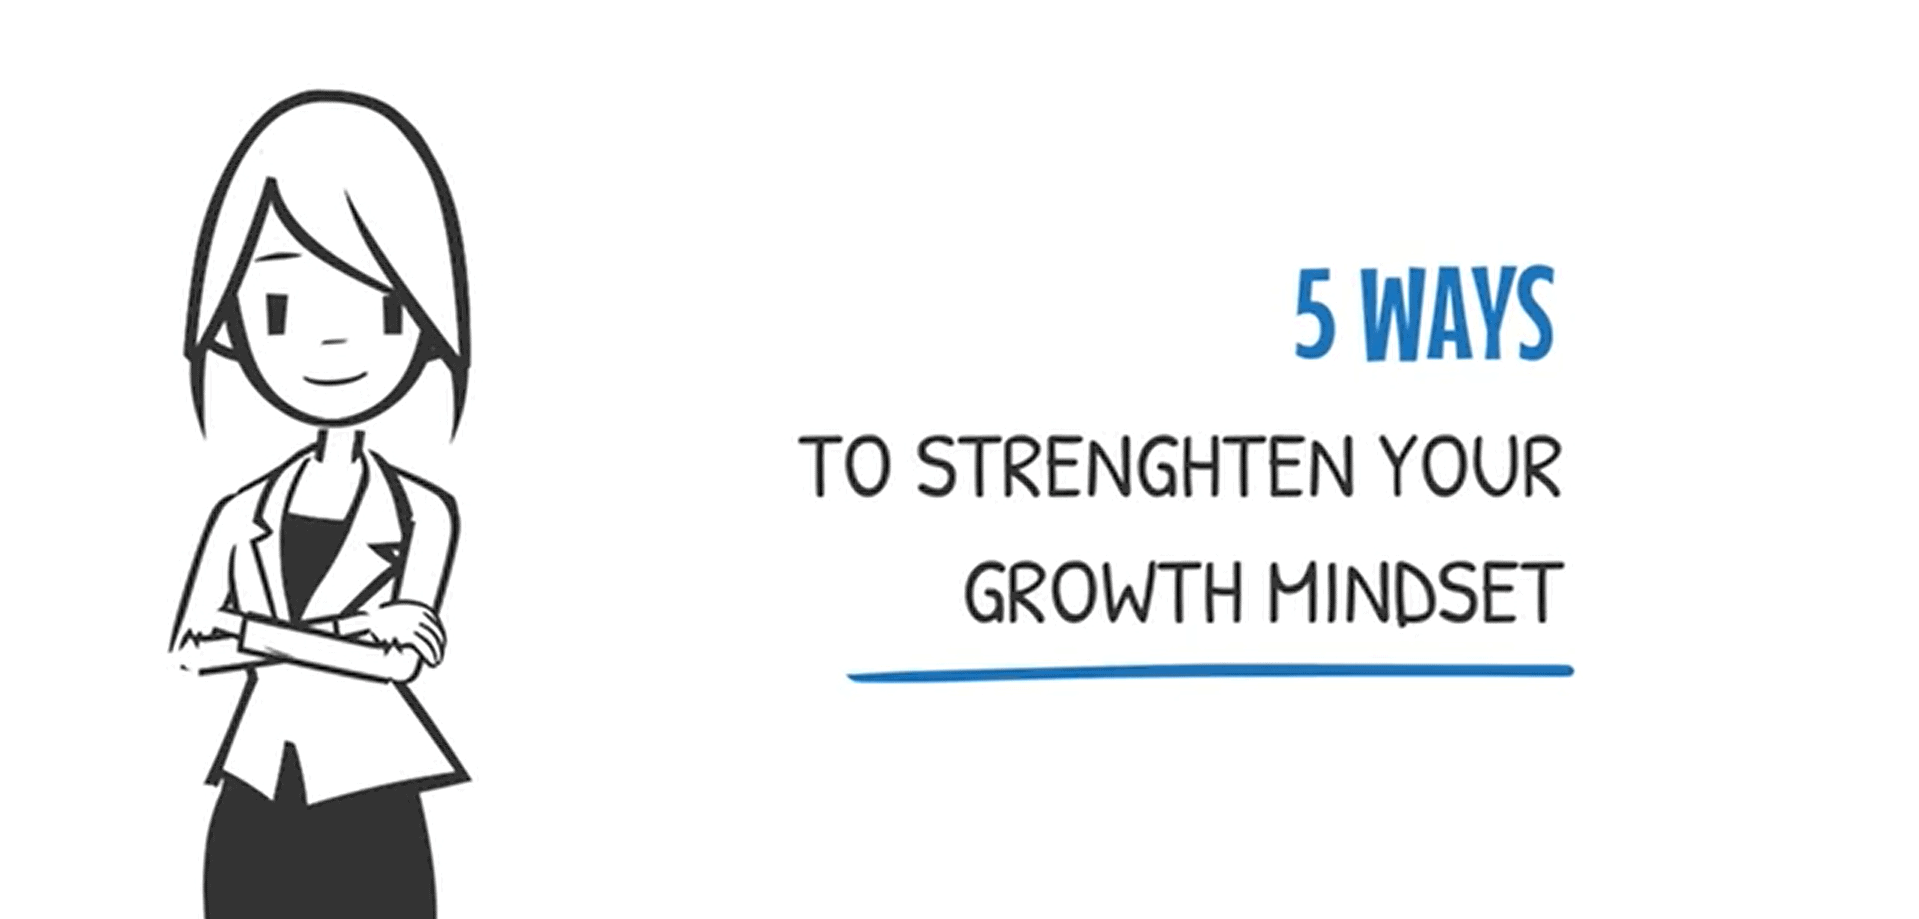 5 ways to strengthen growth mindset thumb video